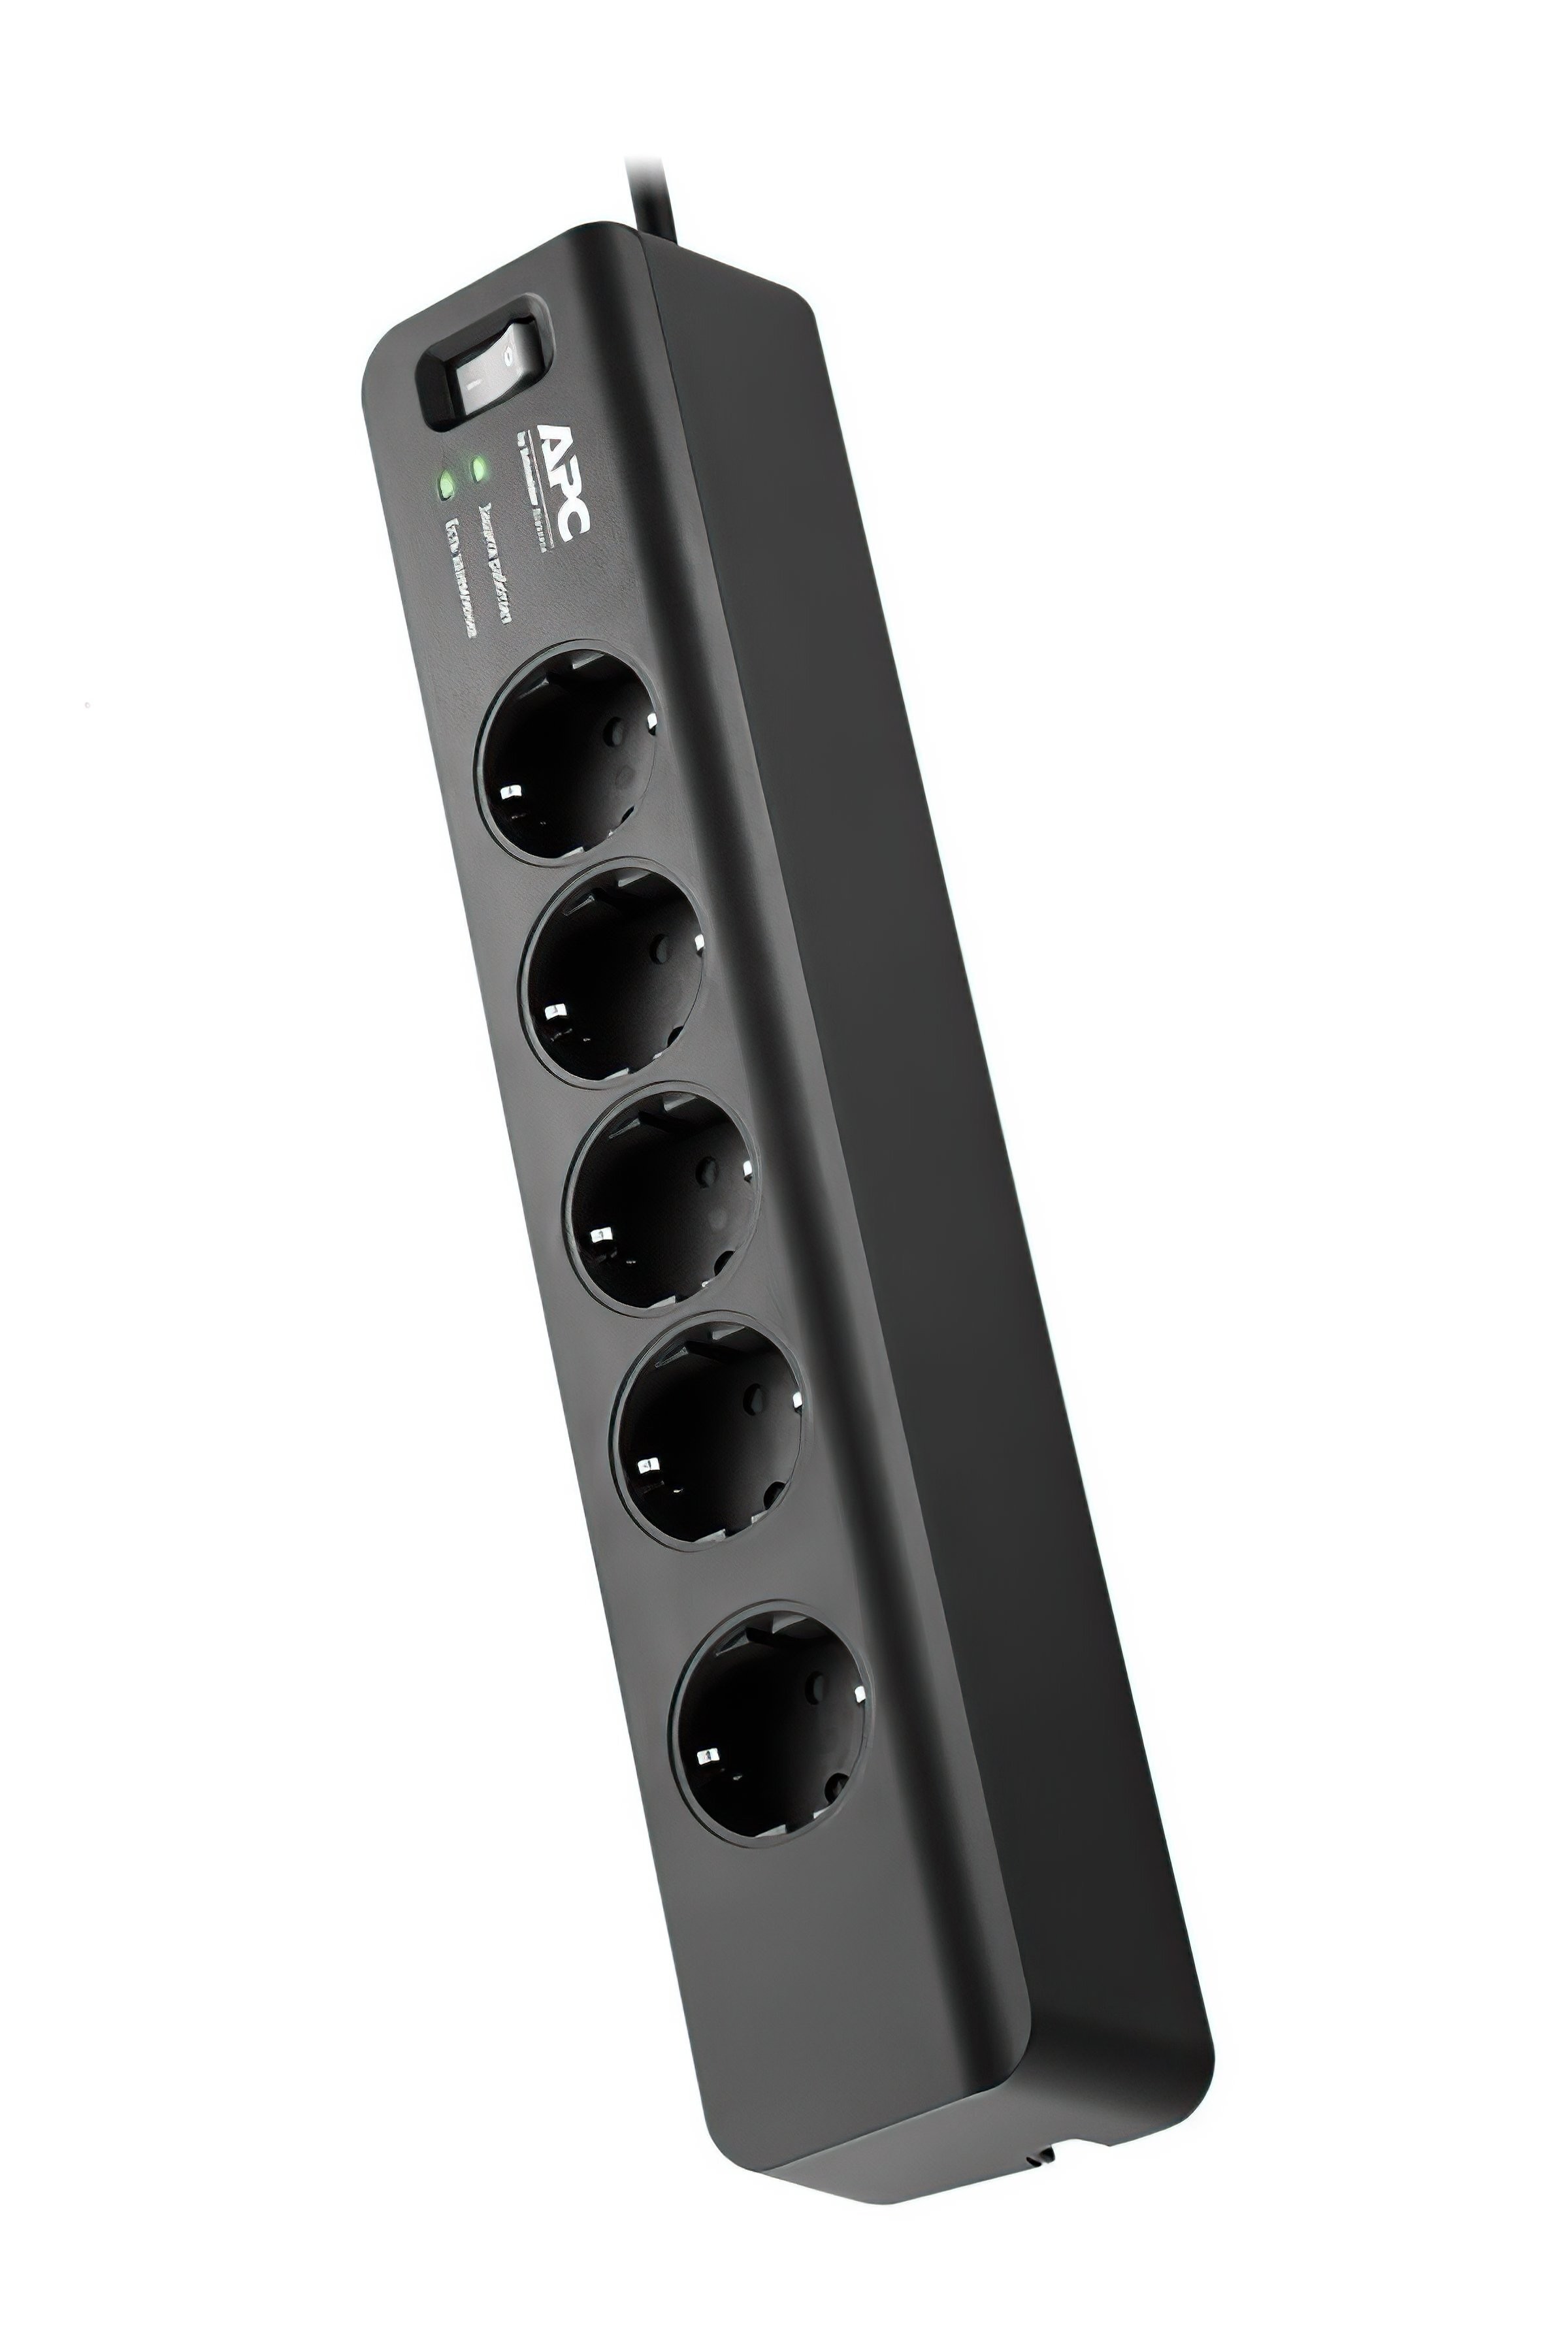 Сетевой фильтр APC Essential SurgeArrest 5 outlets new, Black (PM5B-RS) в Полтаве